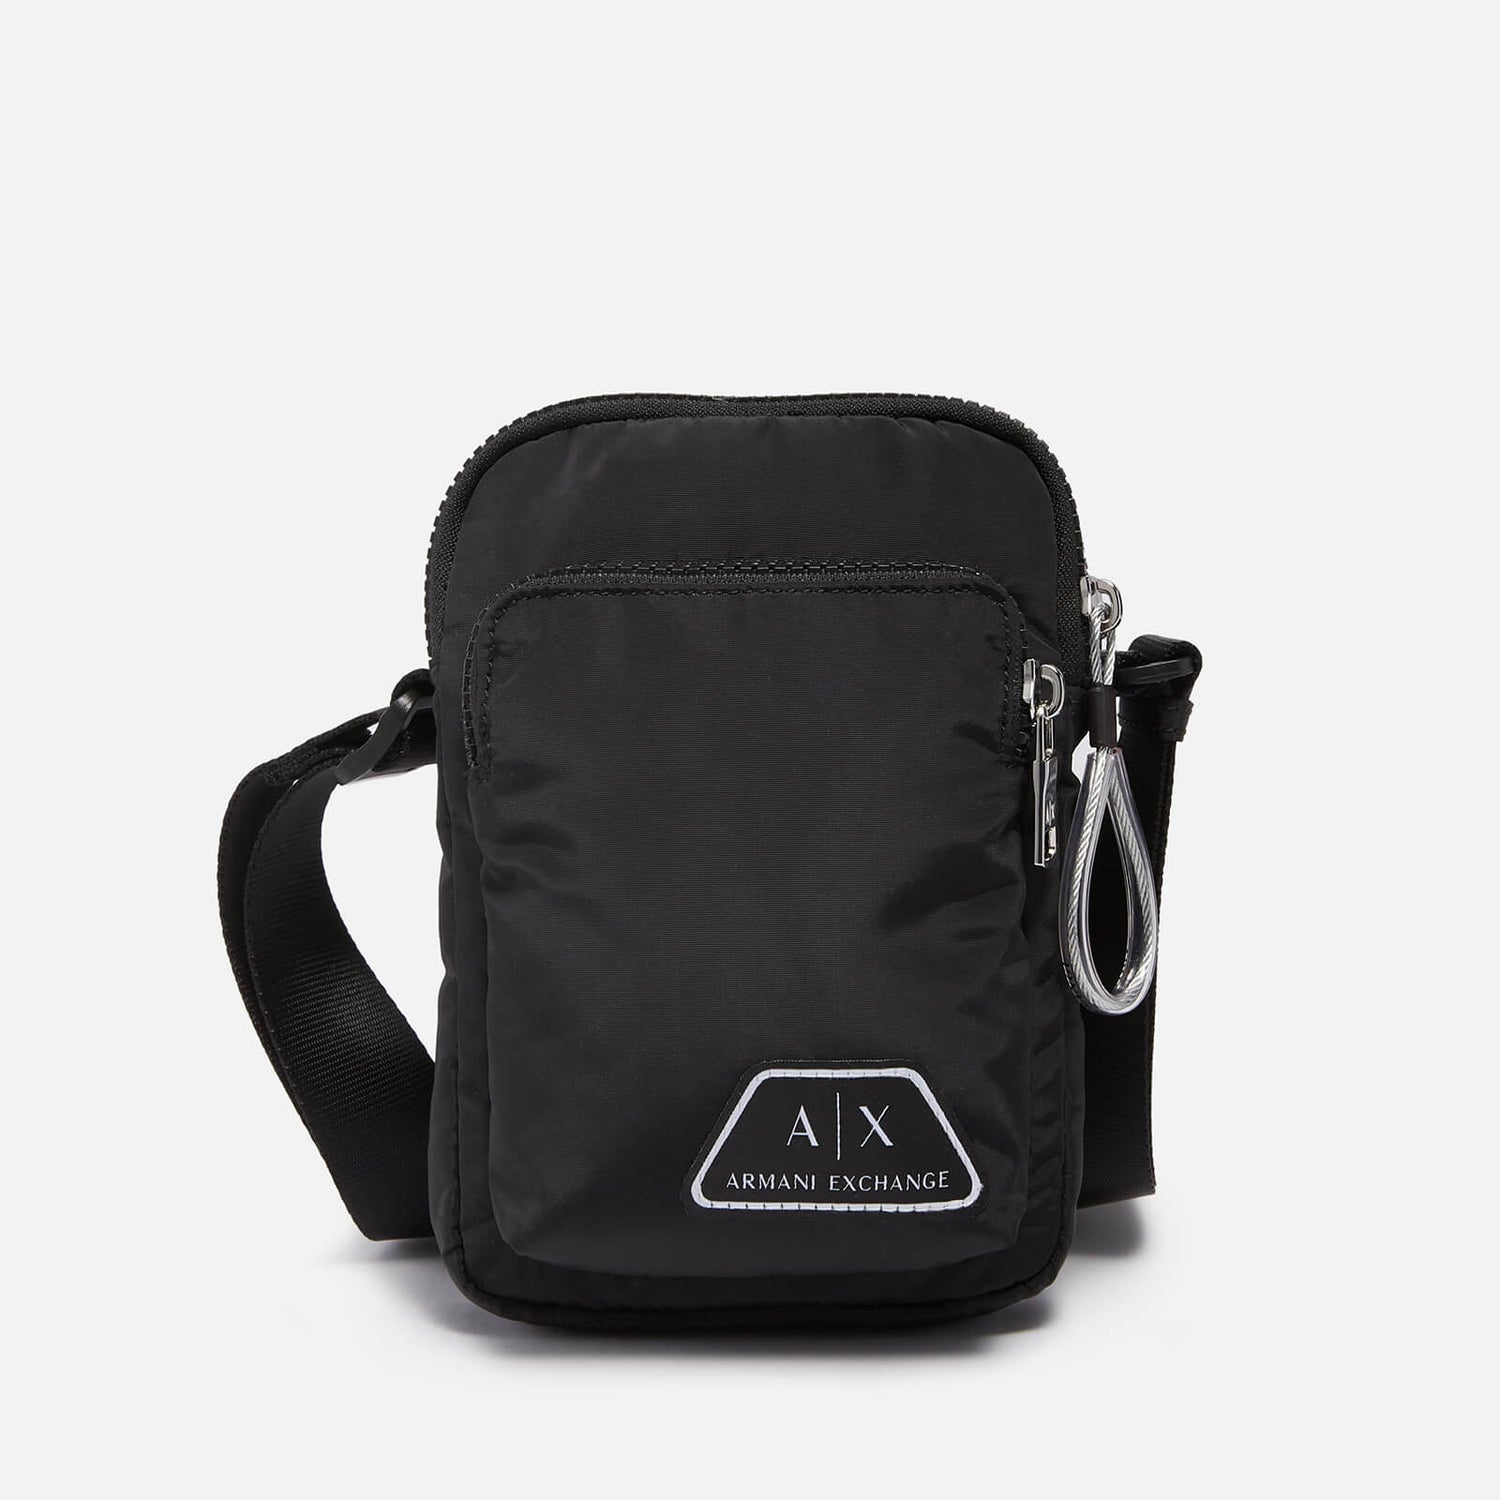 Armani Exchange Men's Cross Body Bag - Black